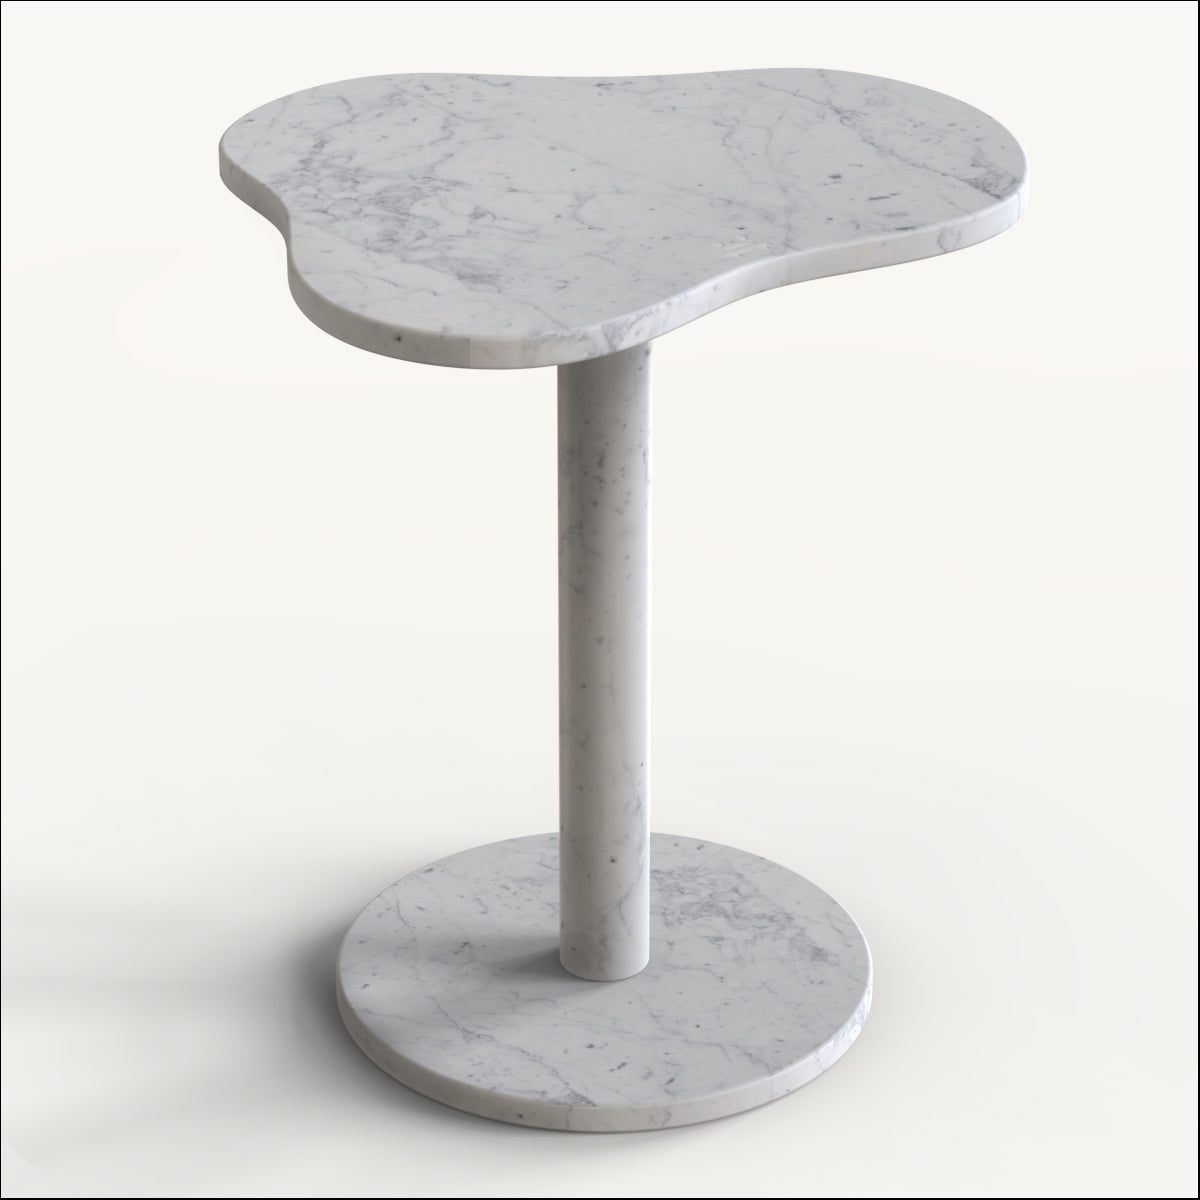 OIXDESIGN CloudDream Medium Side Table, Italian Carrara Marble, Micro Scene Graph, Side View